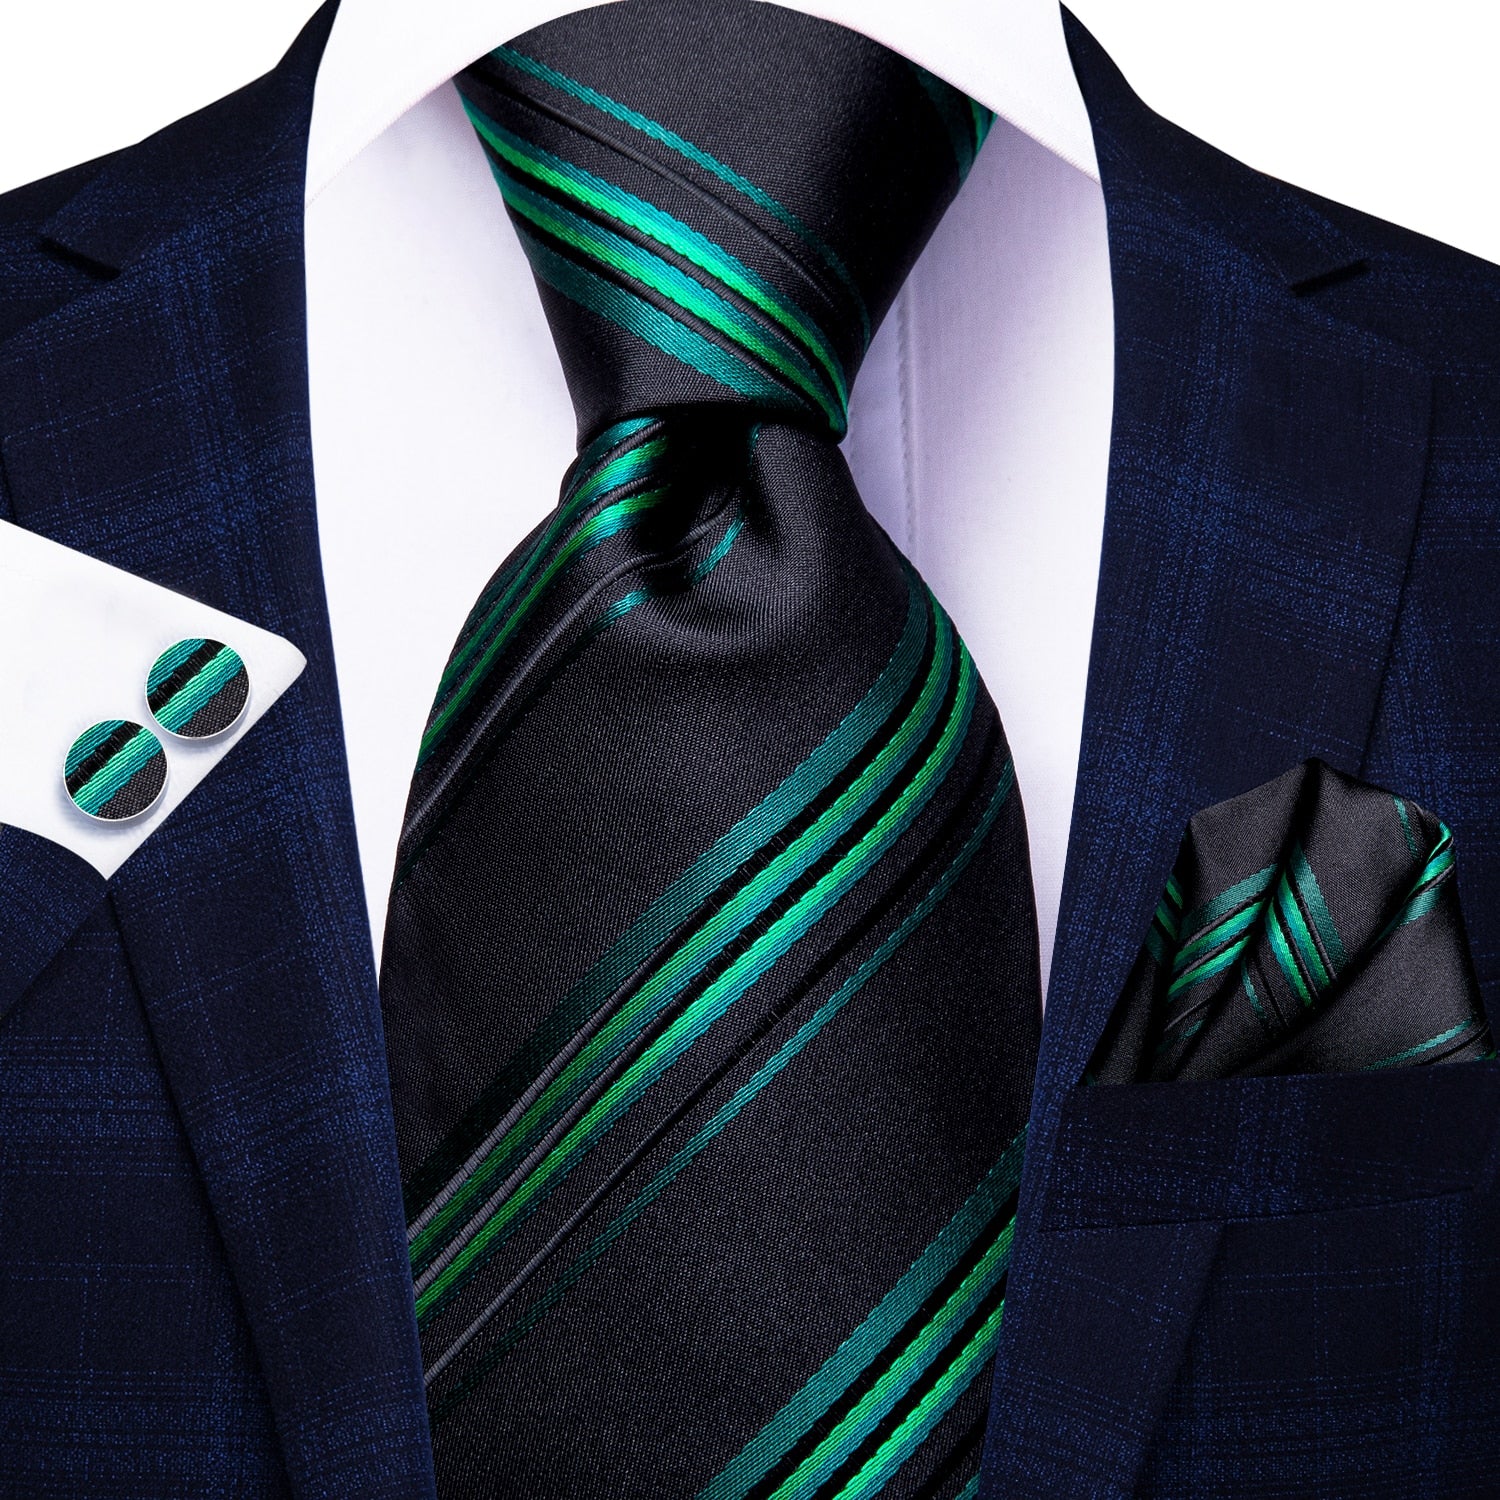 Cravate Noire Et Verte